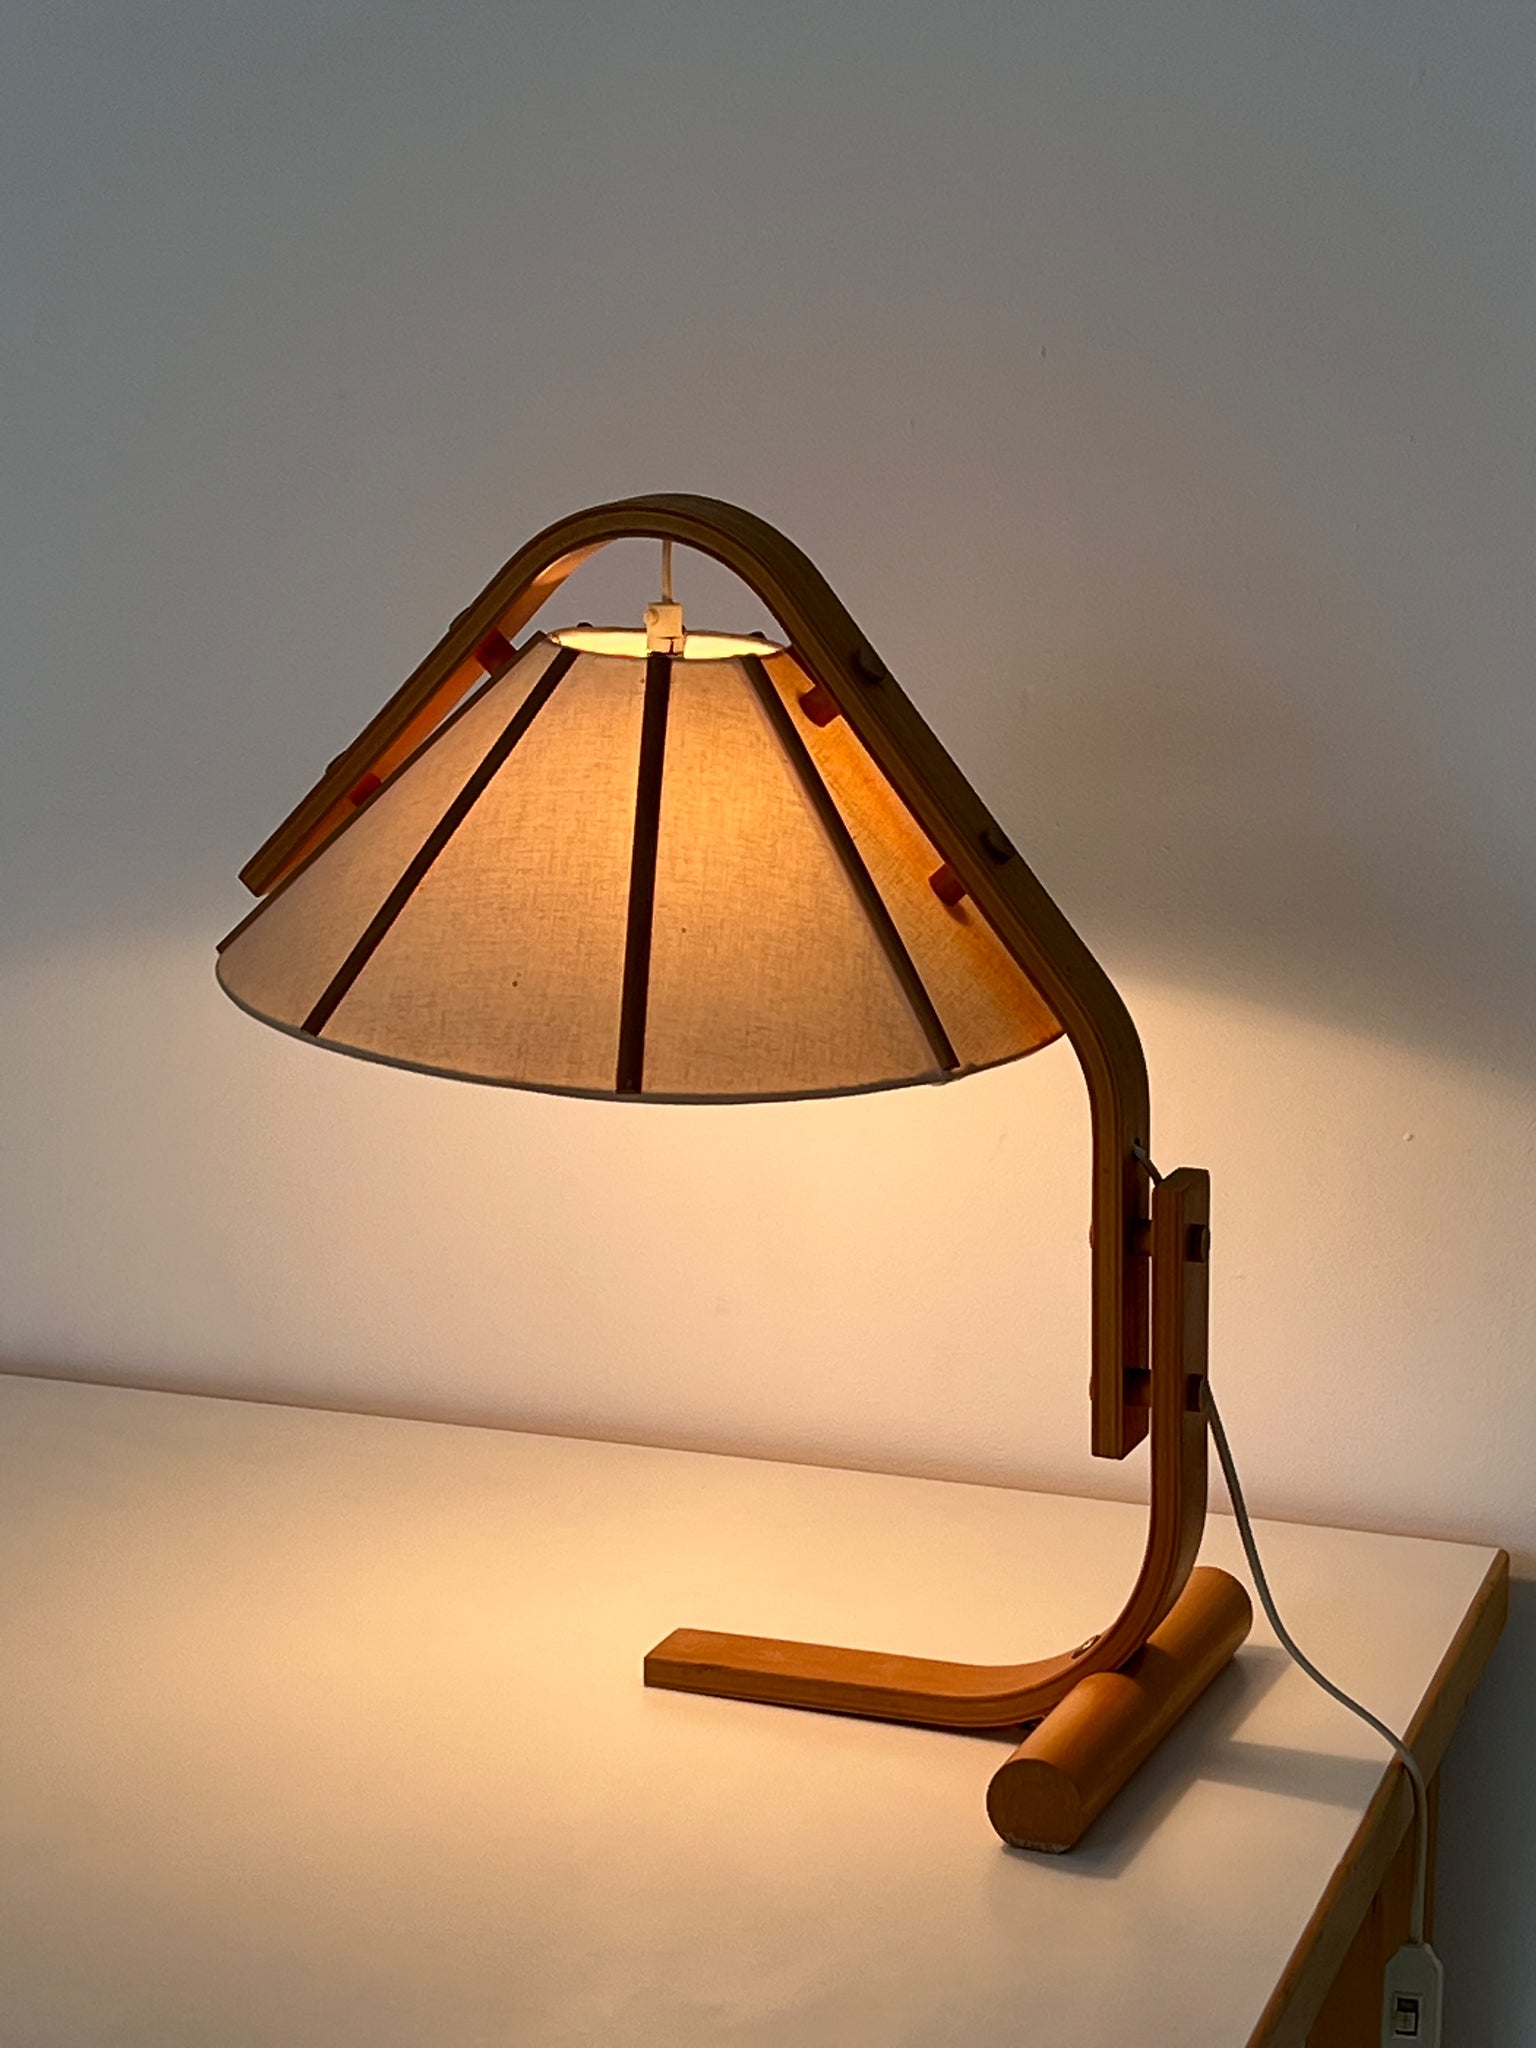 1970s Swedish Beechwood Atneta Lamp by Jan Wickelgren